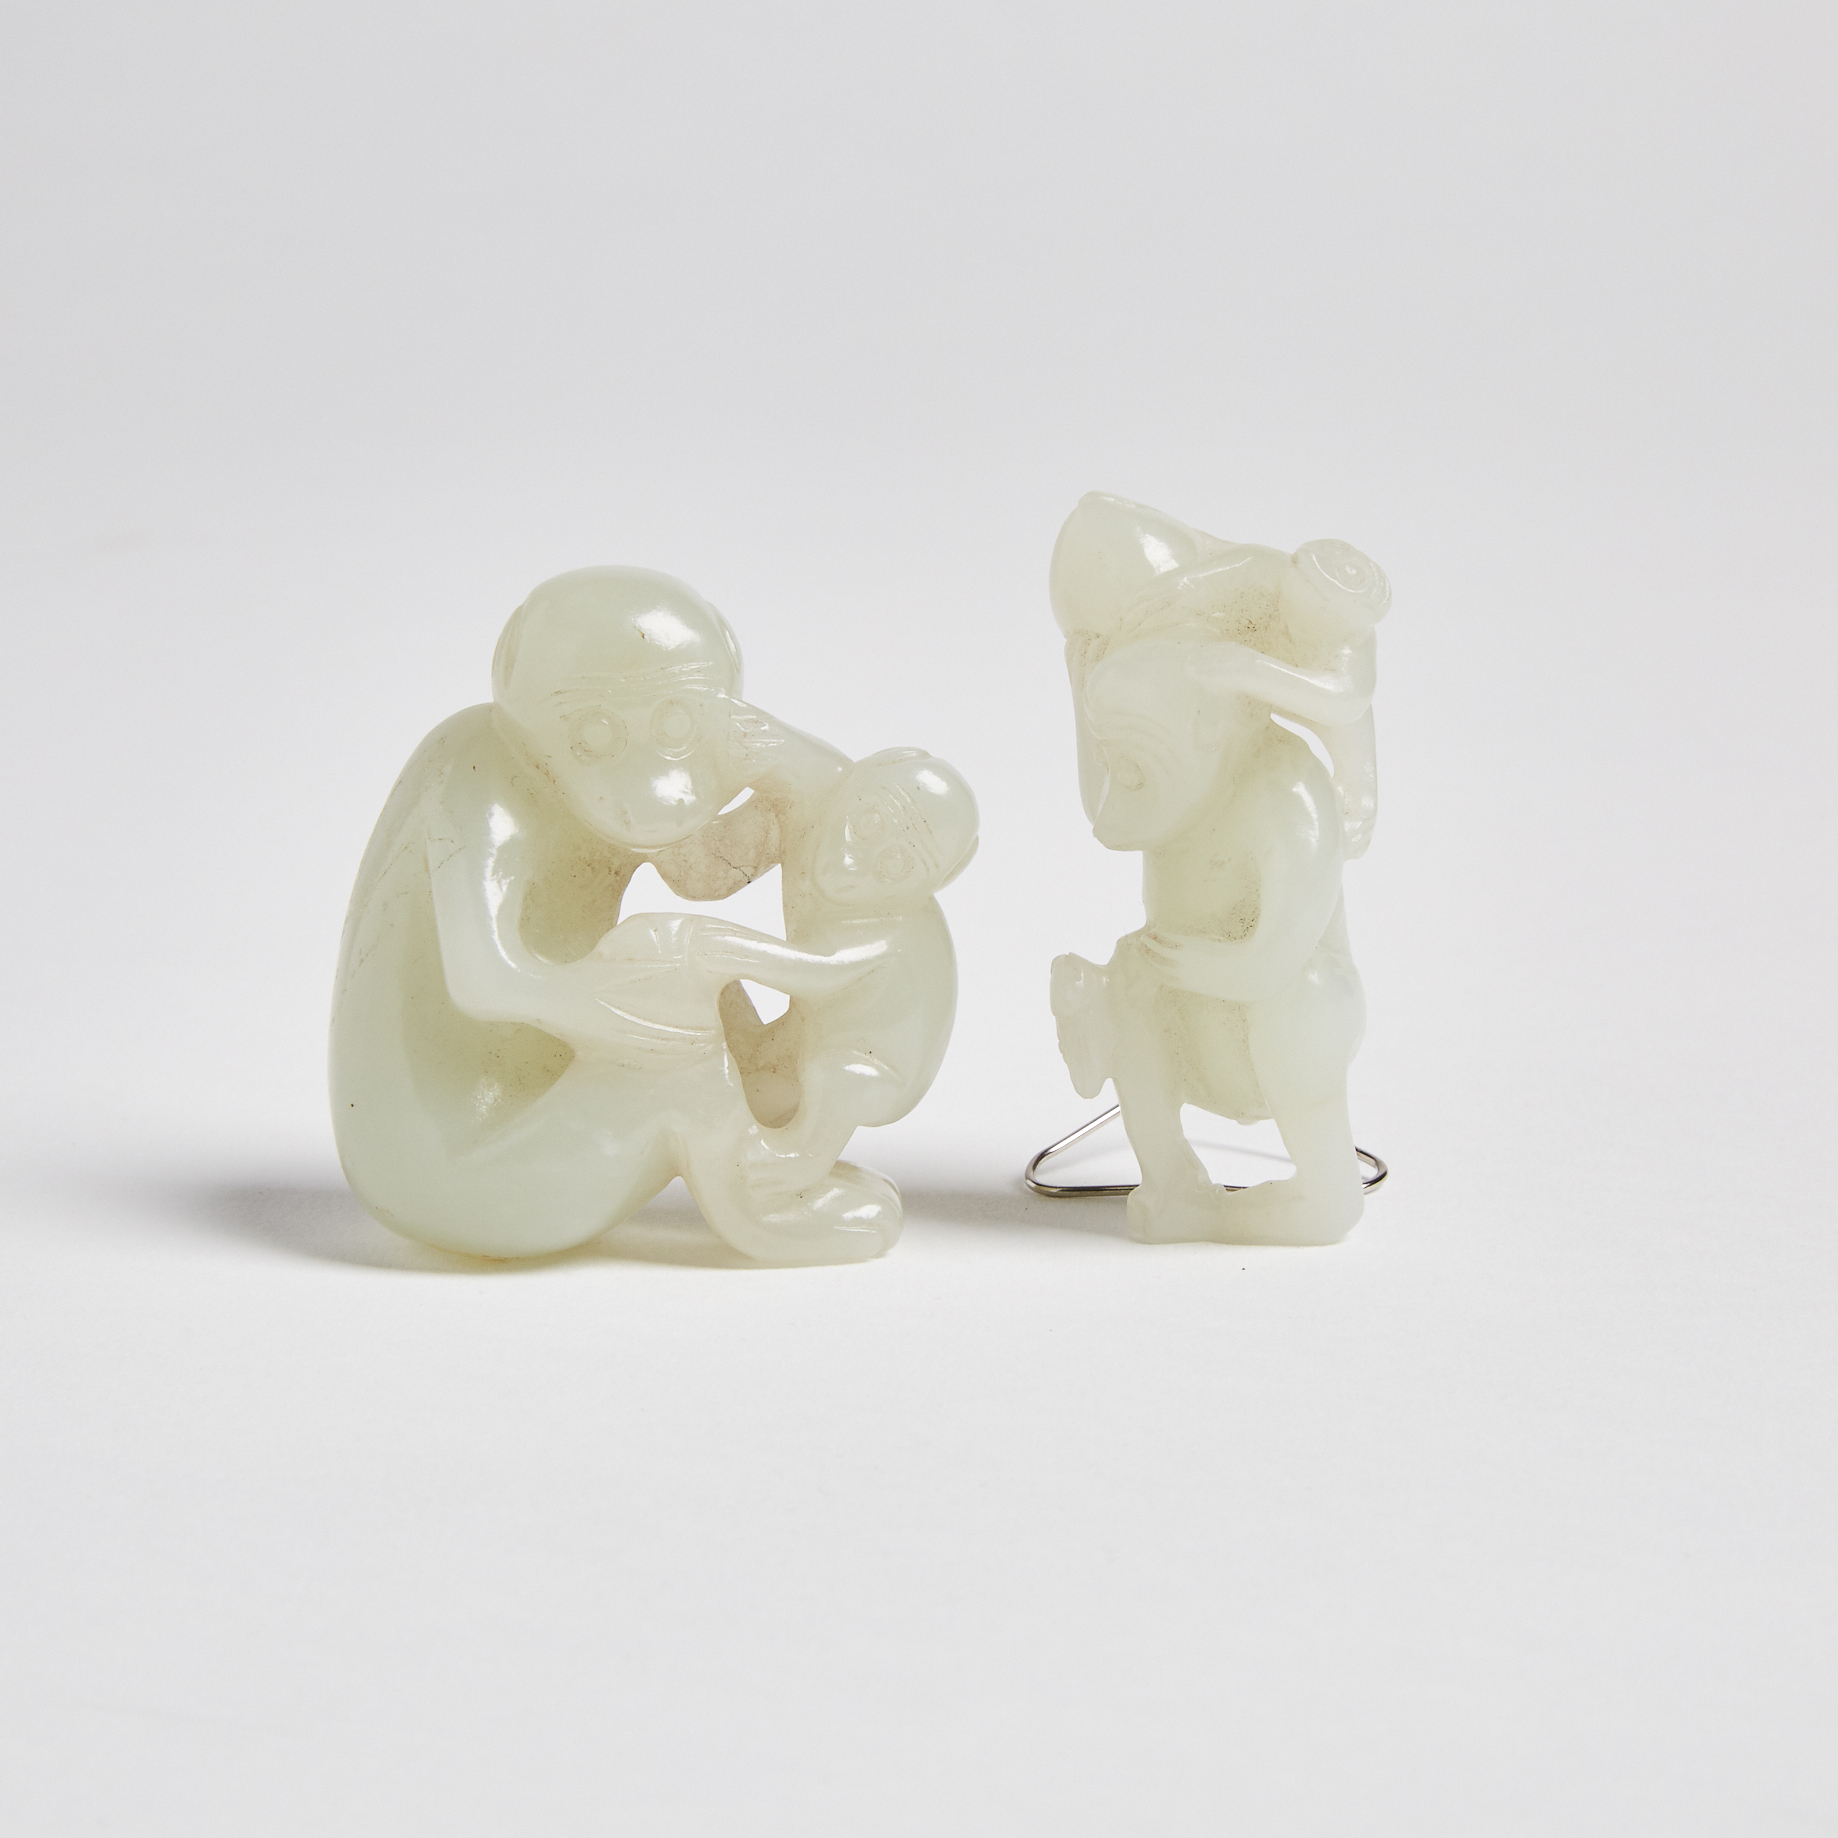 Two Celadon White Jade Carvings of Monkeys